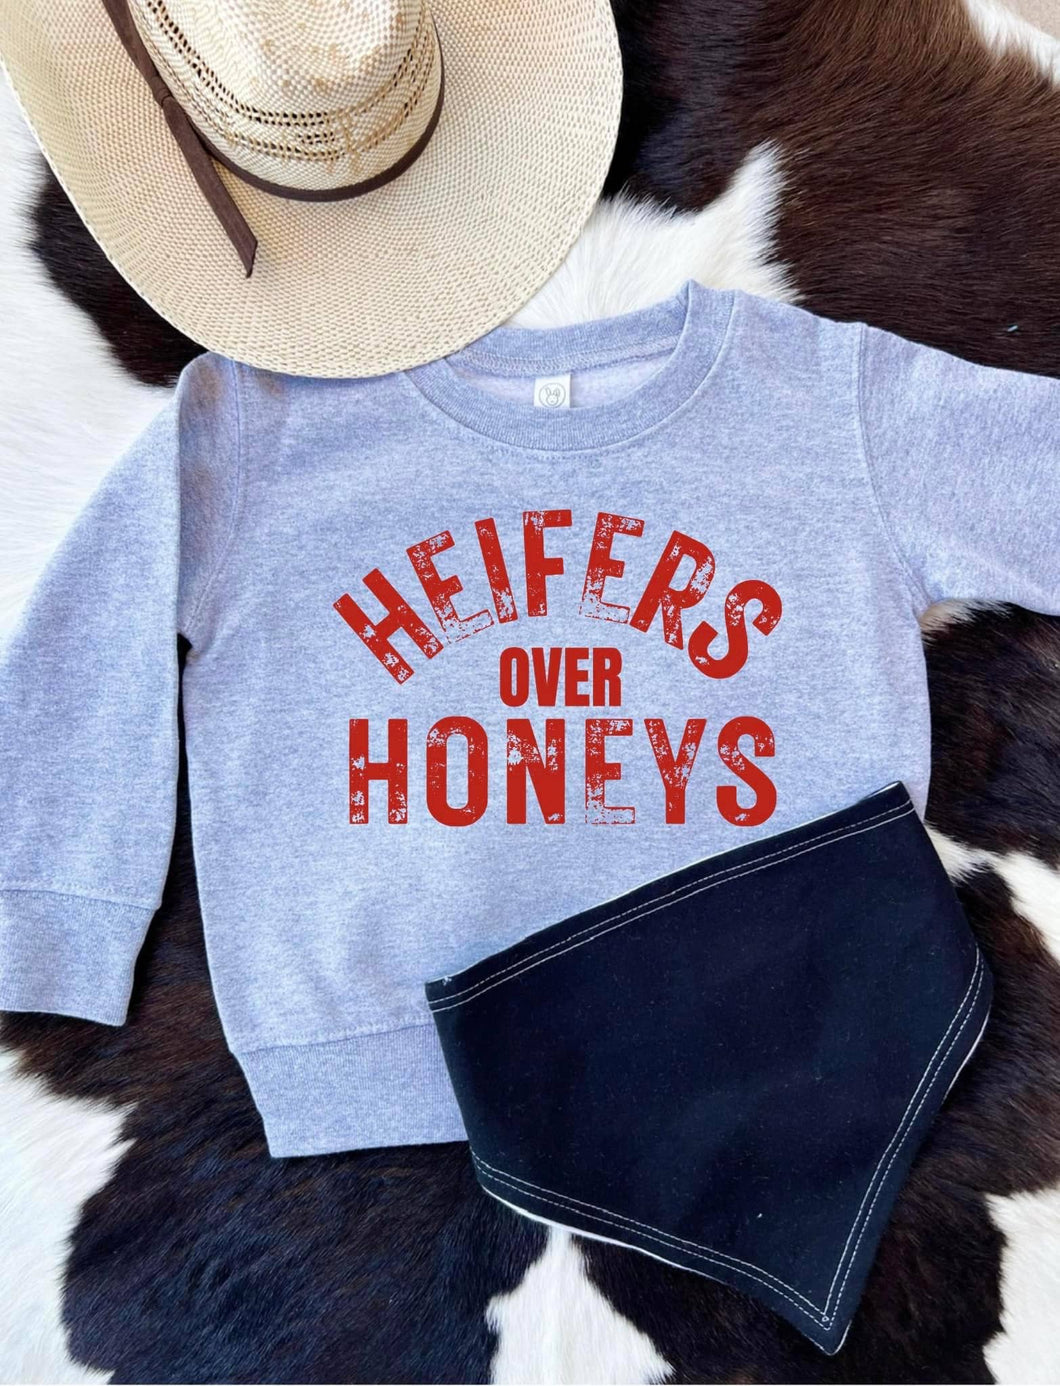 Heifers over Honeys Toddlers Sweatshirt - FOX Avenue